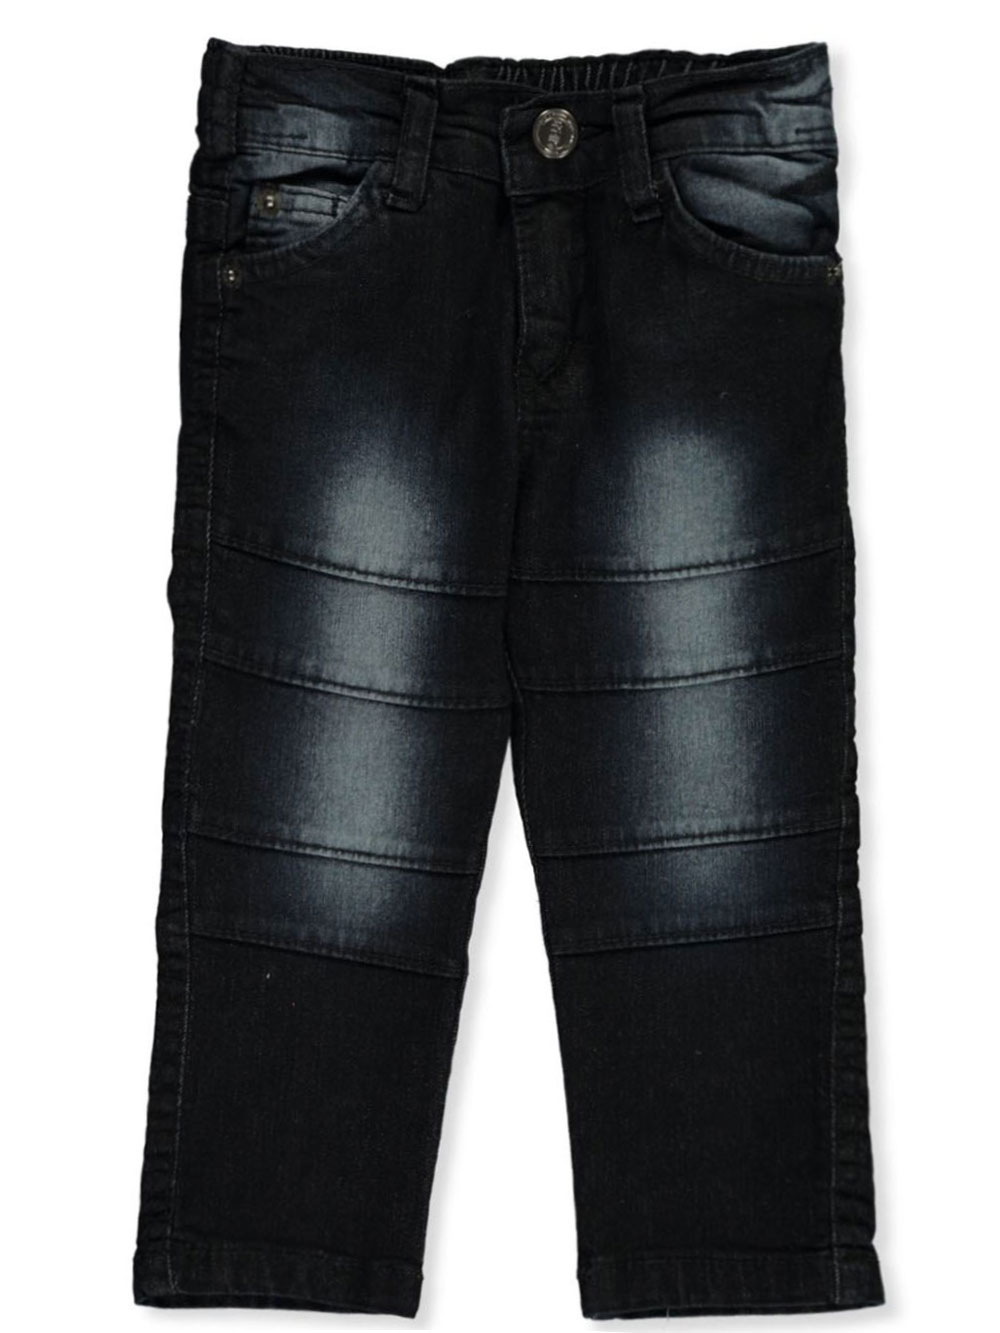 gs115 jeans website